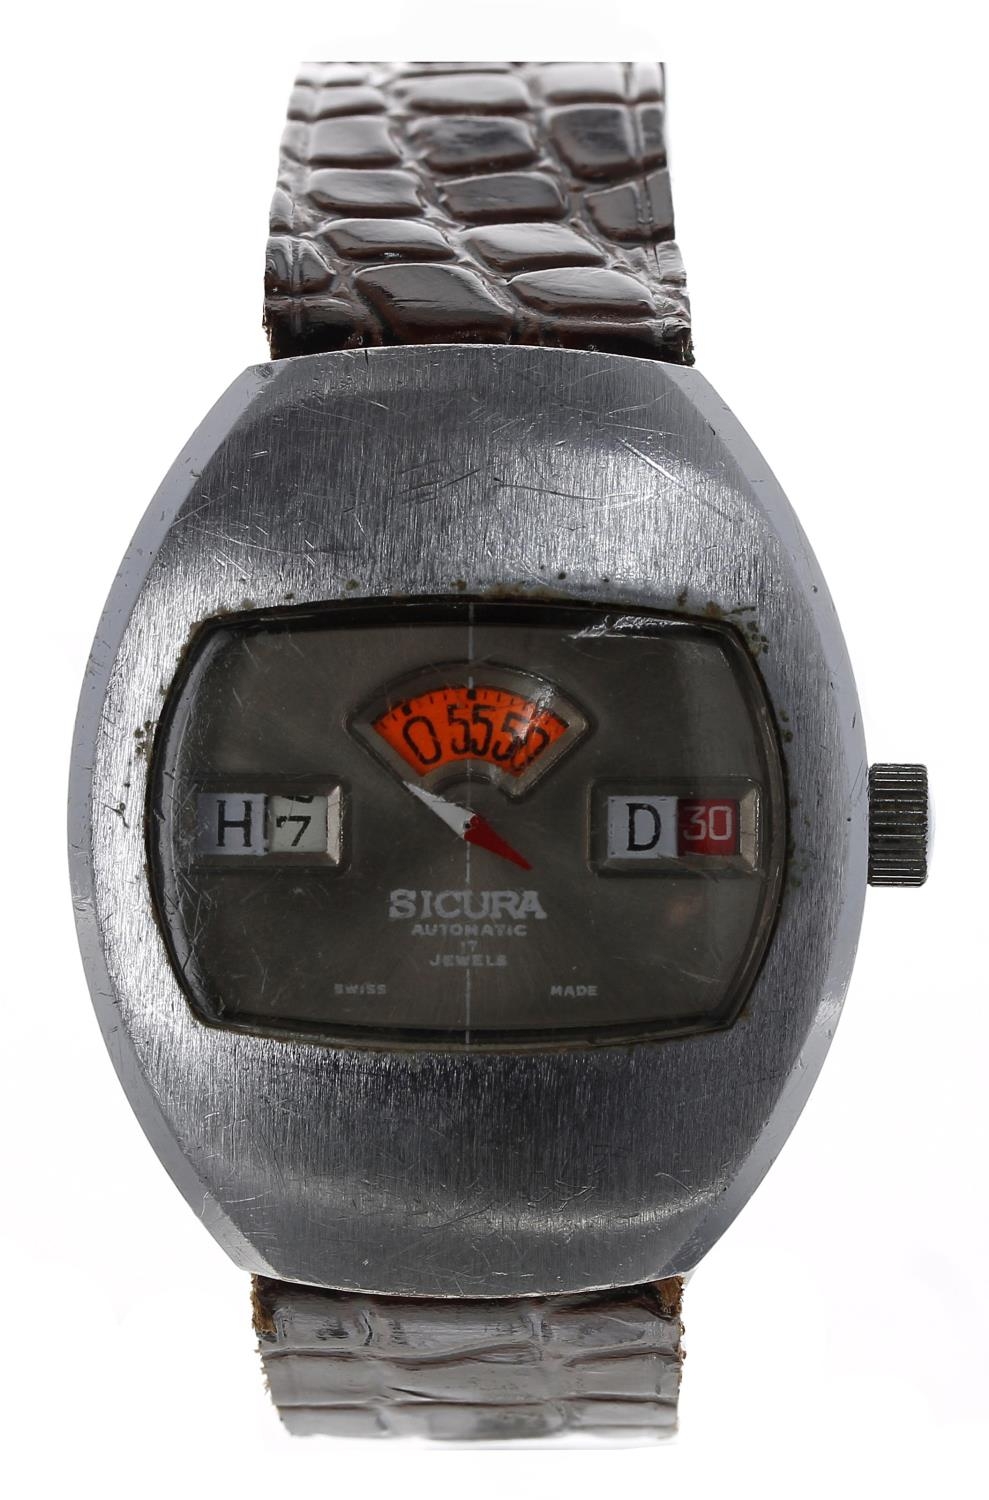 Sicura Digital 'Jump Hour' nickel and stainless steel gentleman's wristwatch, rectangular silvered